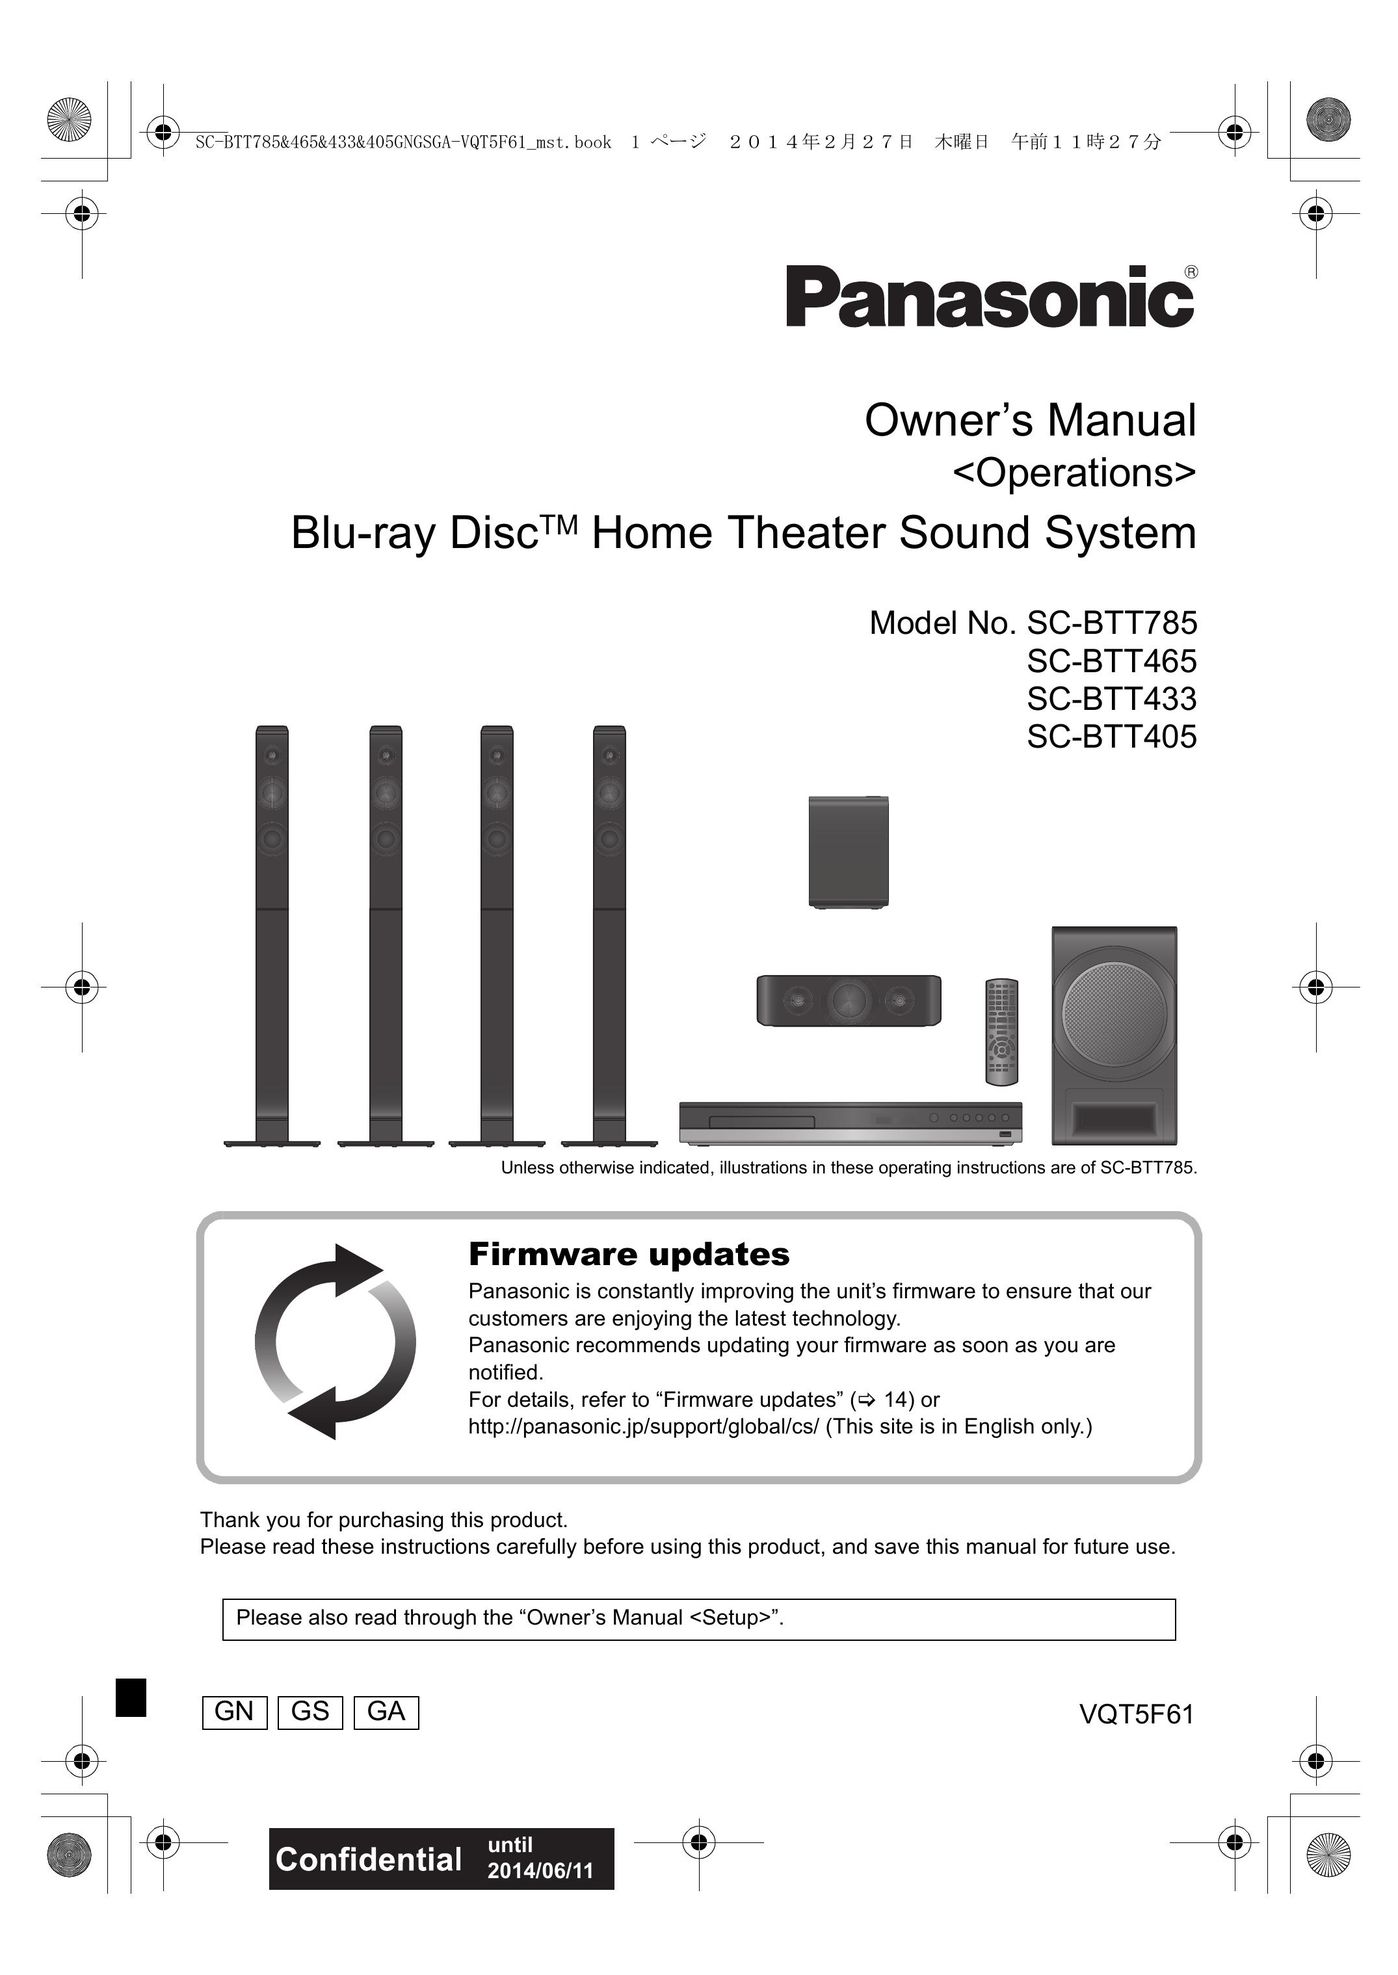 Panasonic SC-BTT465 Video Game Sound System User Manual